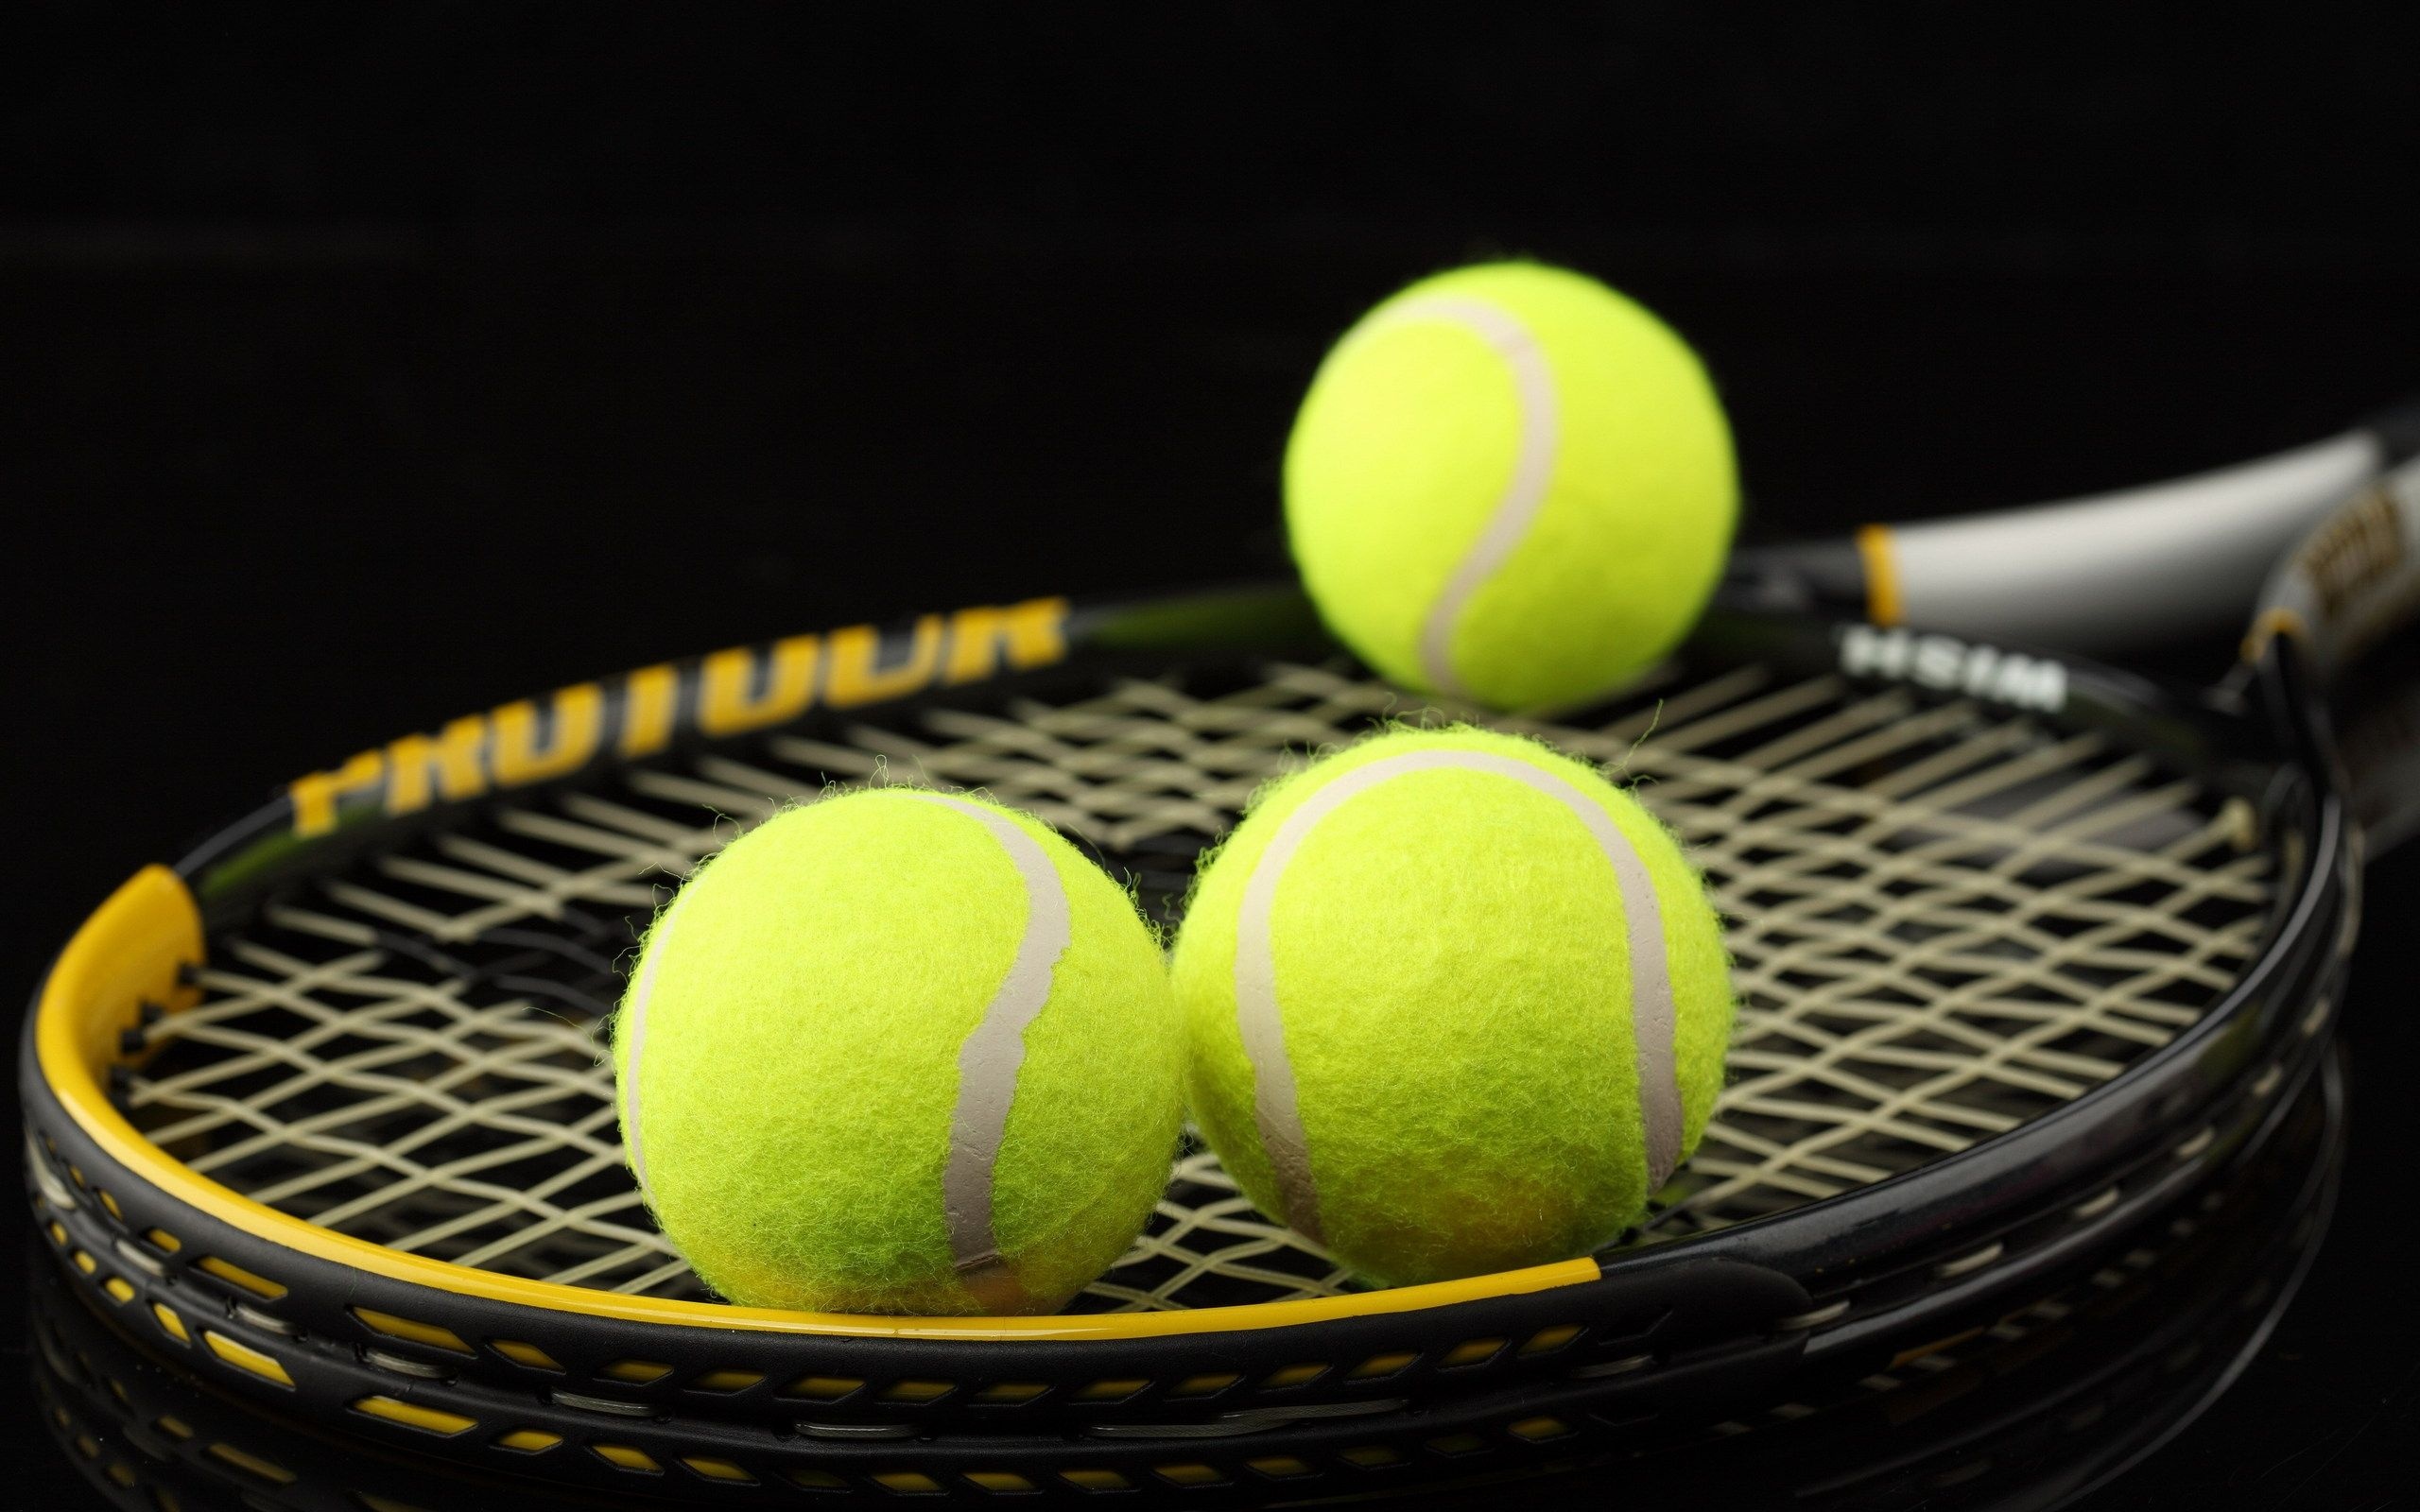 Ball Badminton: A sport played using racquets to hit a wool ball across a net. 2560x1600 HD Wallpaper.